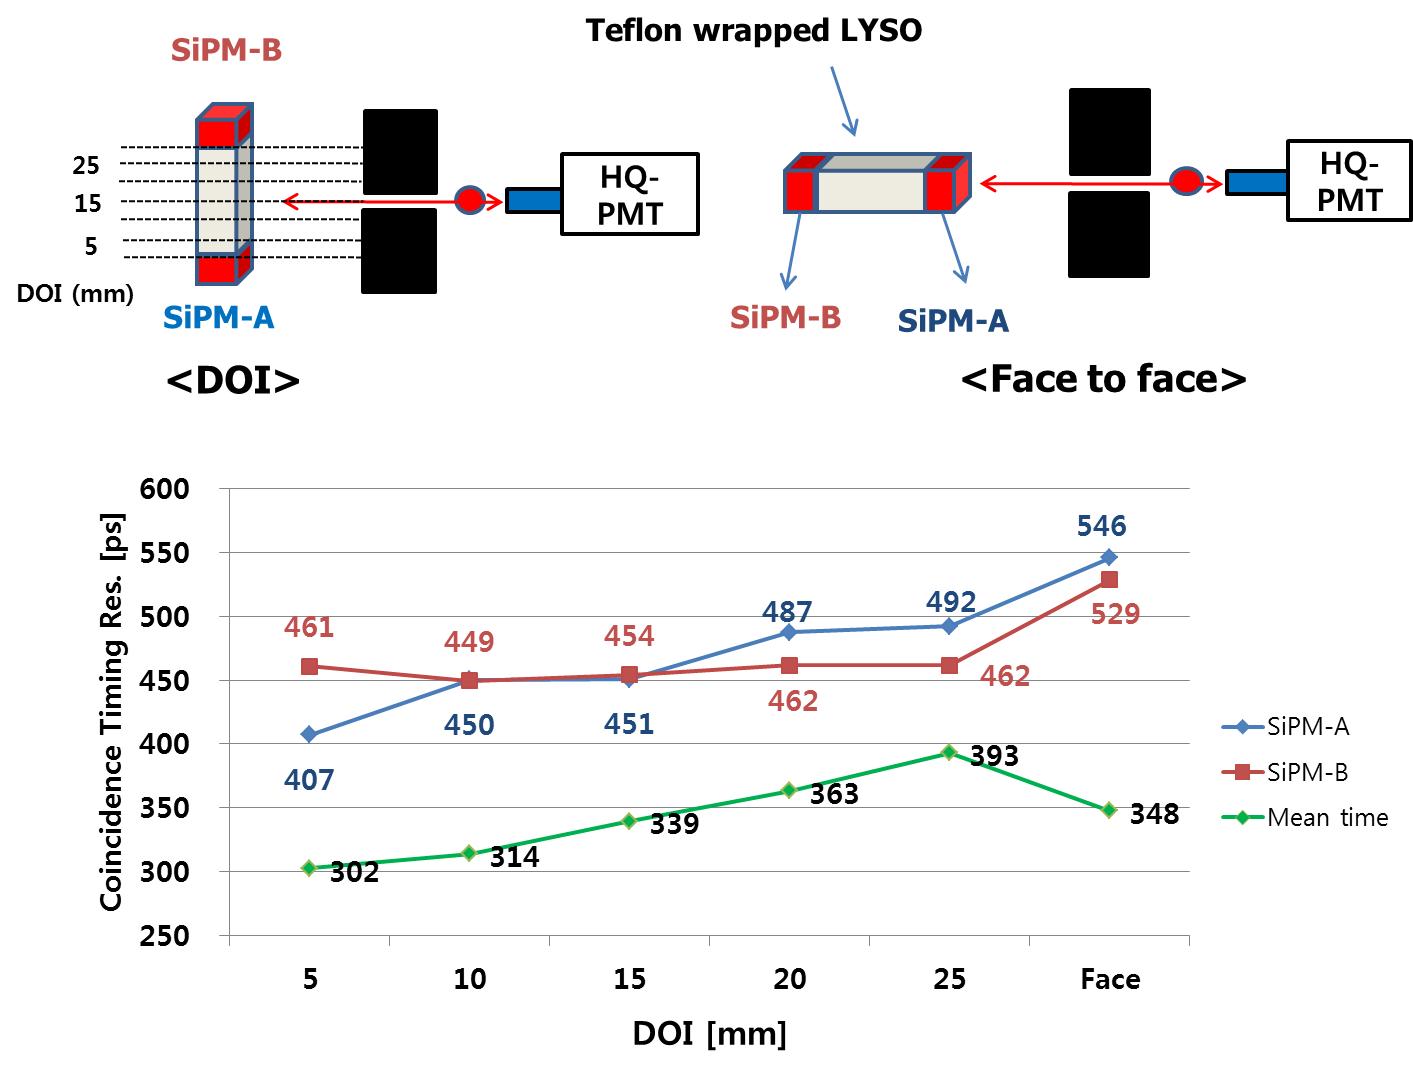 2.7 × 2.9 × 30 mm3 LYSO 섬광결정의 5, 15, 25 mm 반응깊이에서의 DOI resolution과 QDC distributions